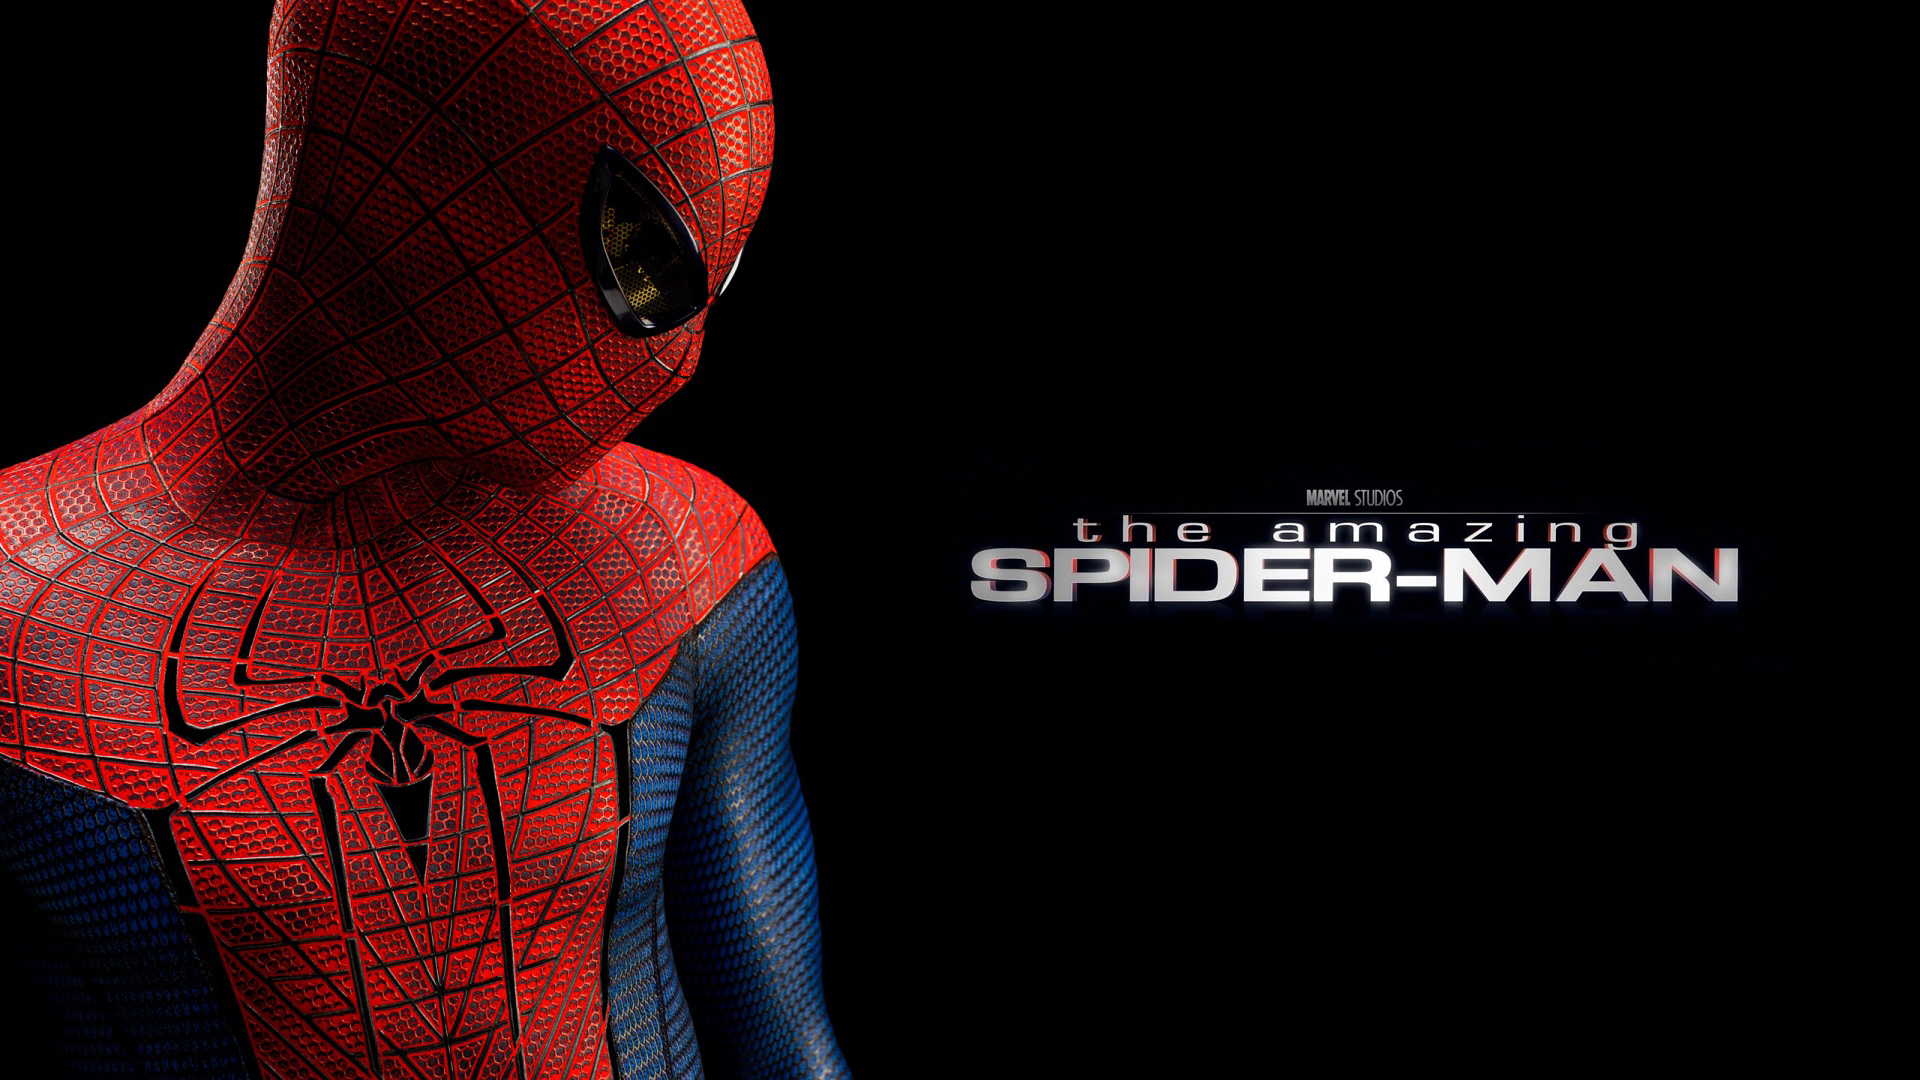 Spider-Man Web of Shadows Torrent Download - CroTorrents